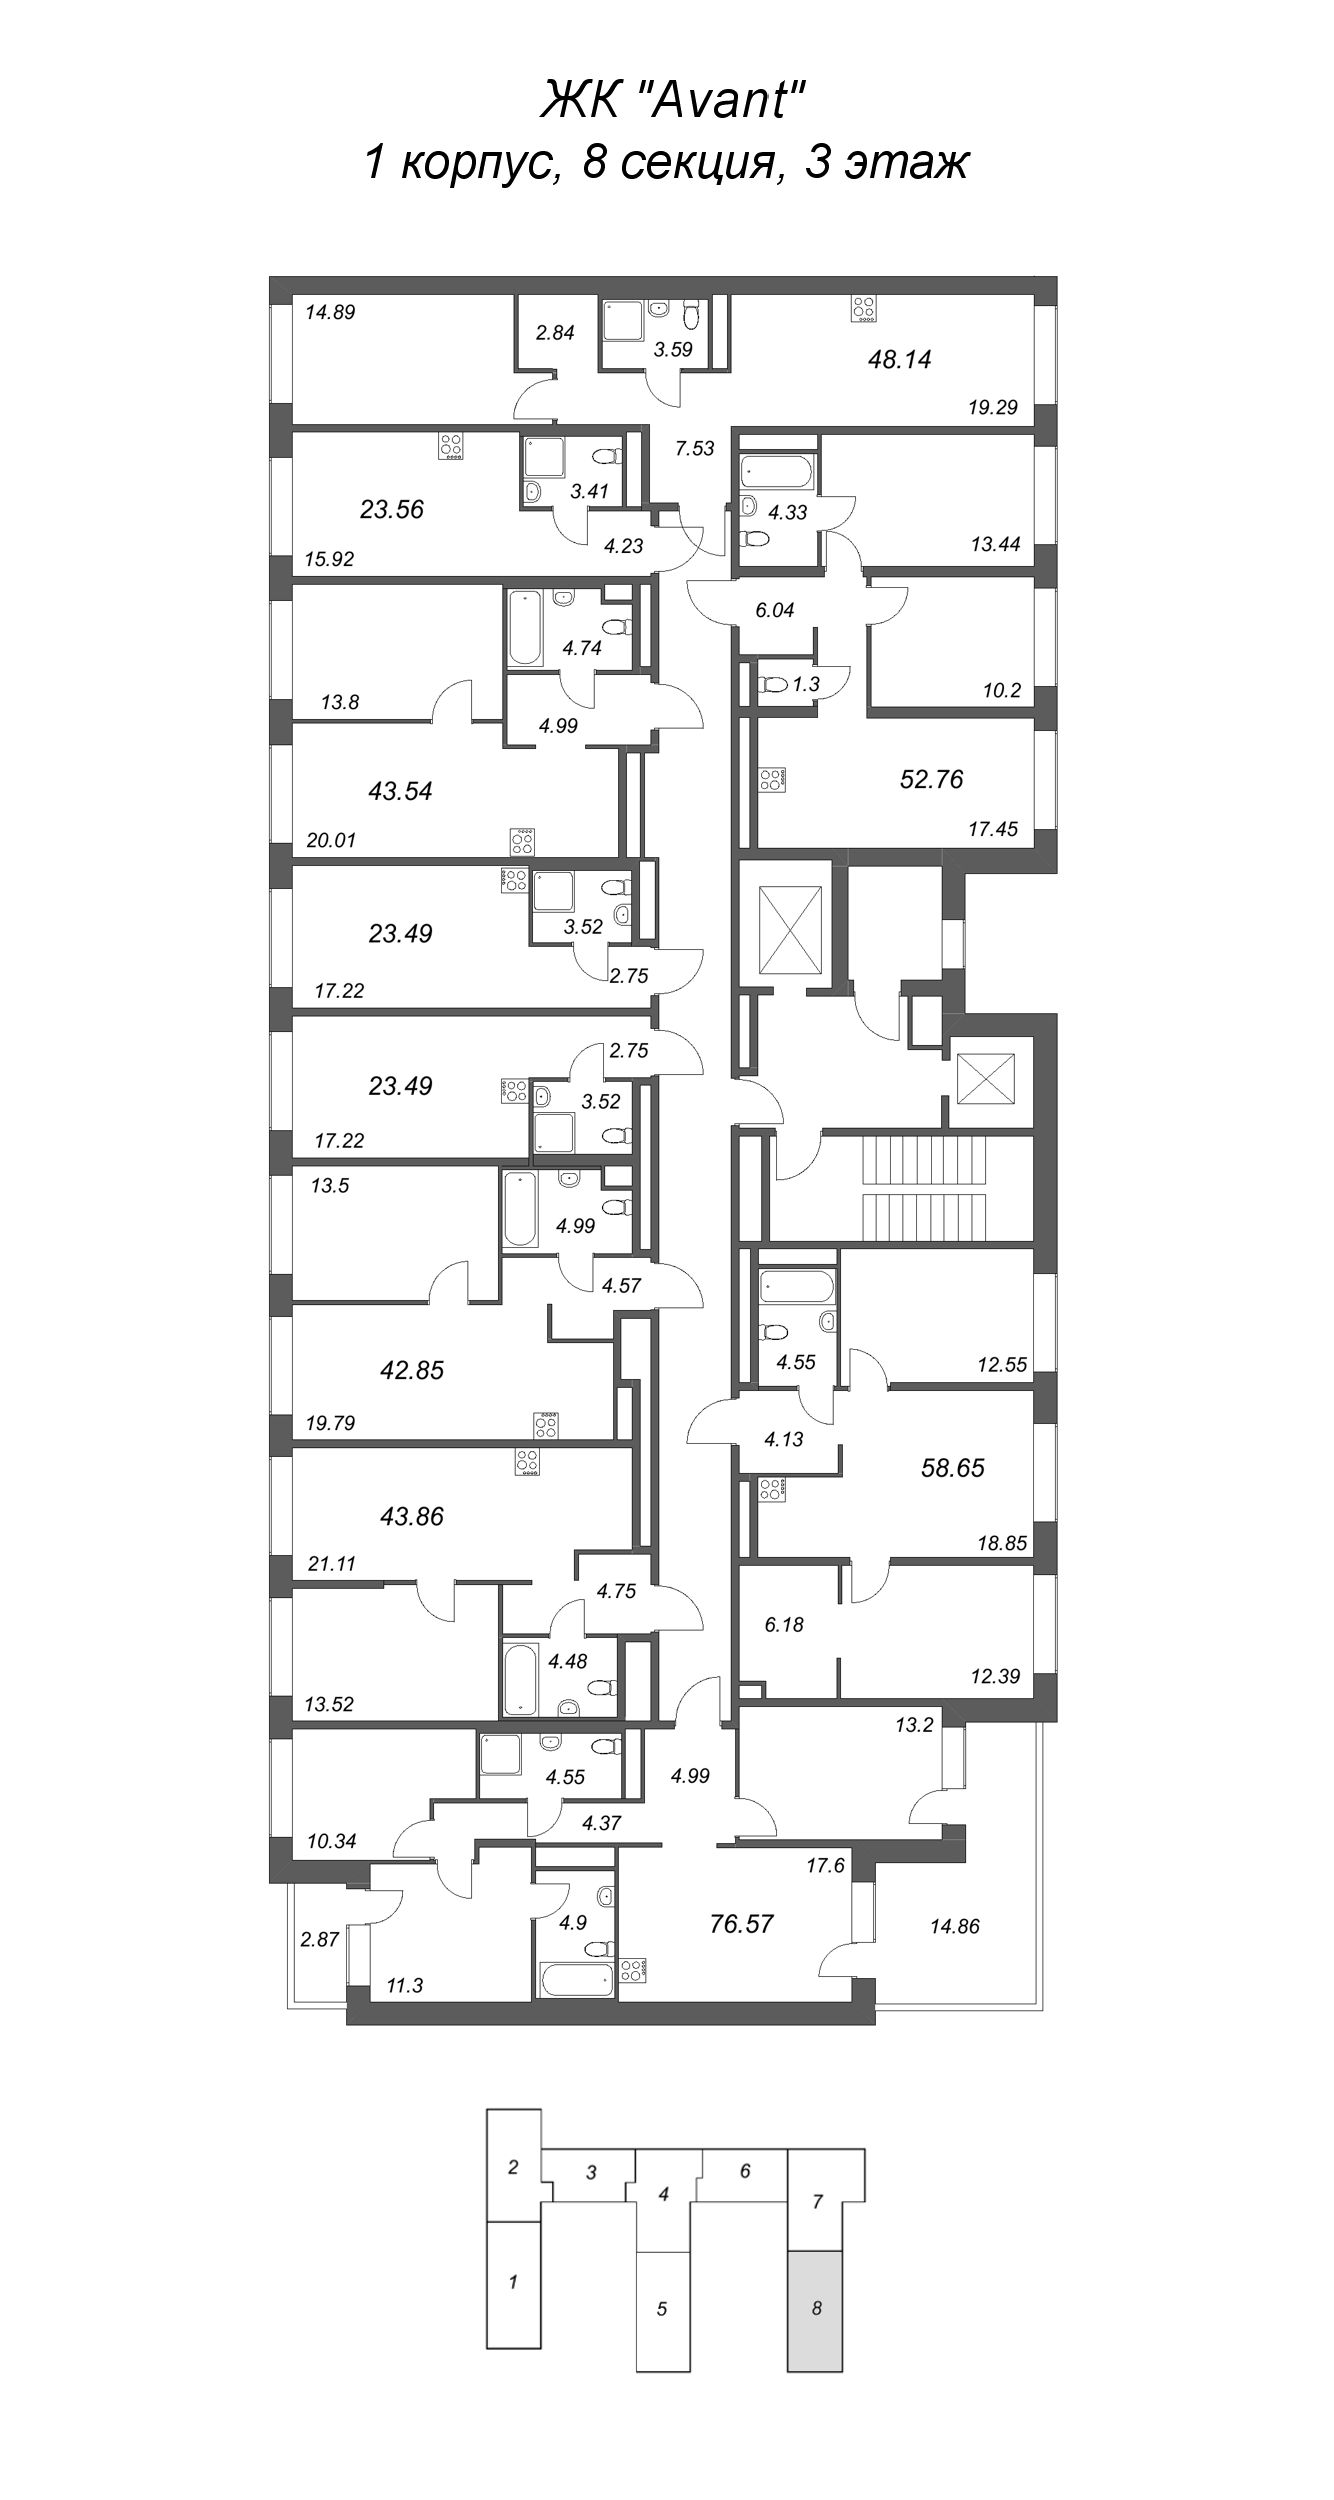 2-комнатная (Евро) квартира, 42.85 м² - планировка этажа